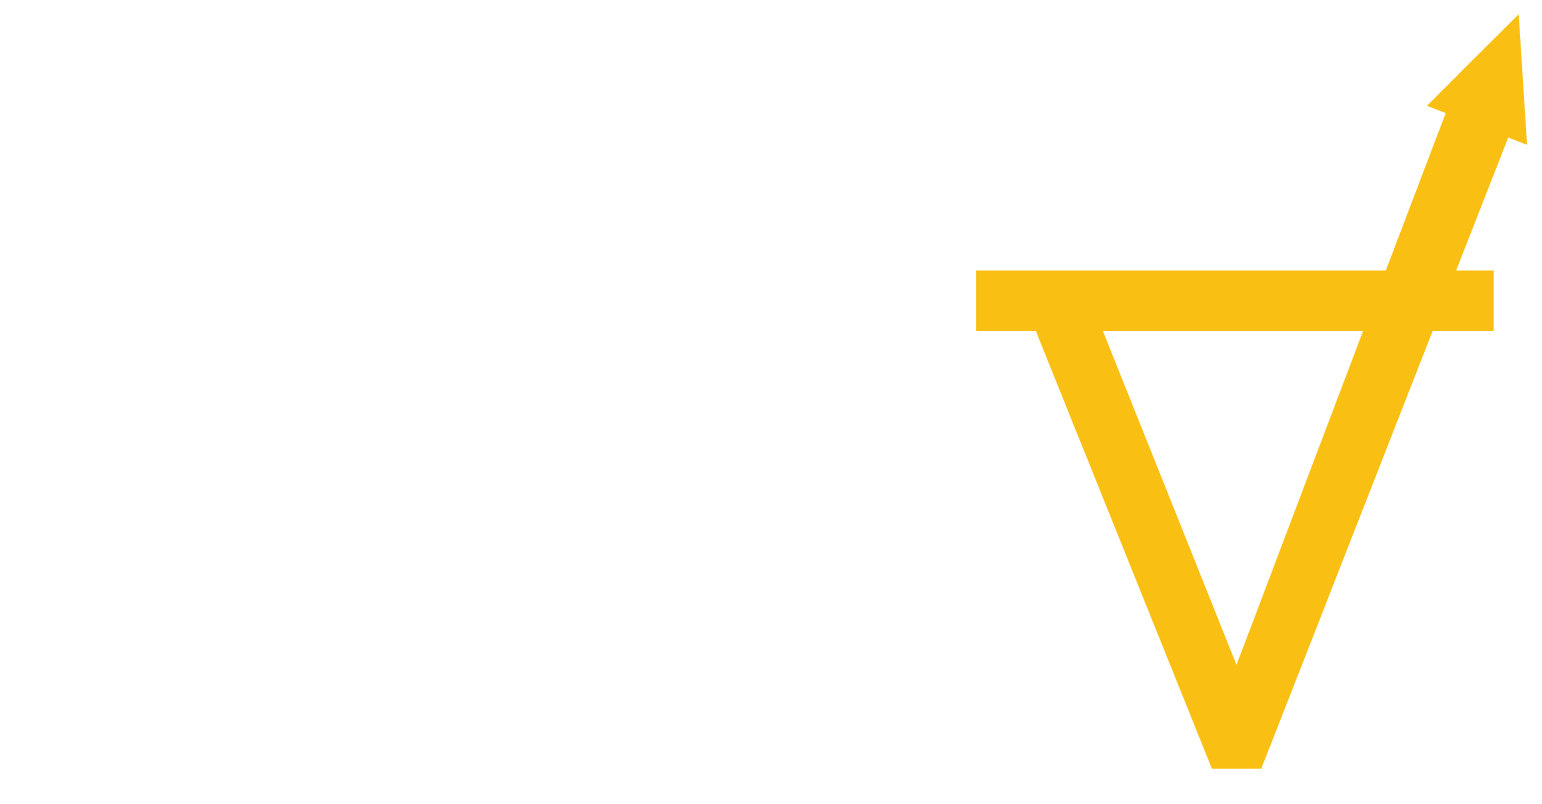 Vanguard International Semiconductor logo large for dark backgrounds (transparent PNG)